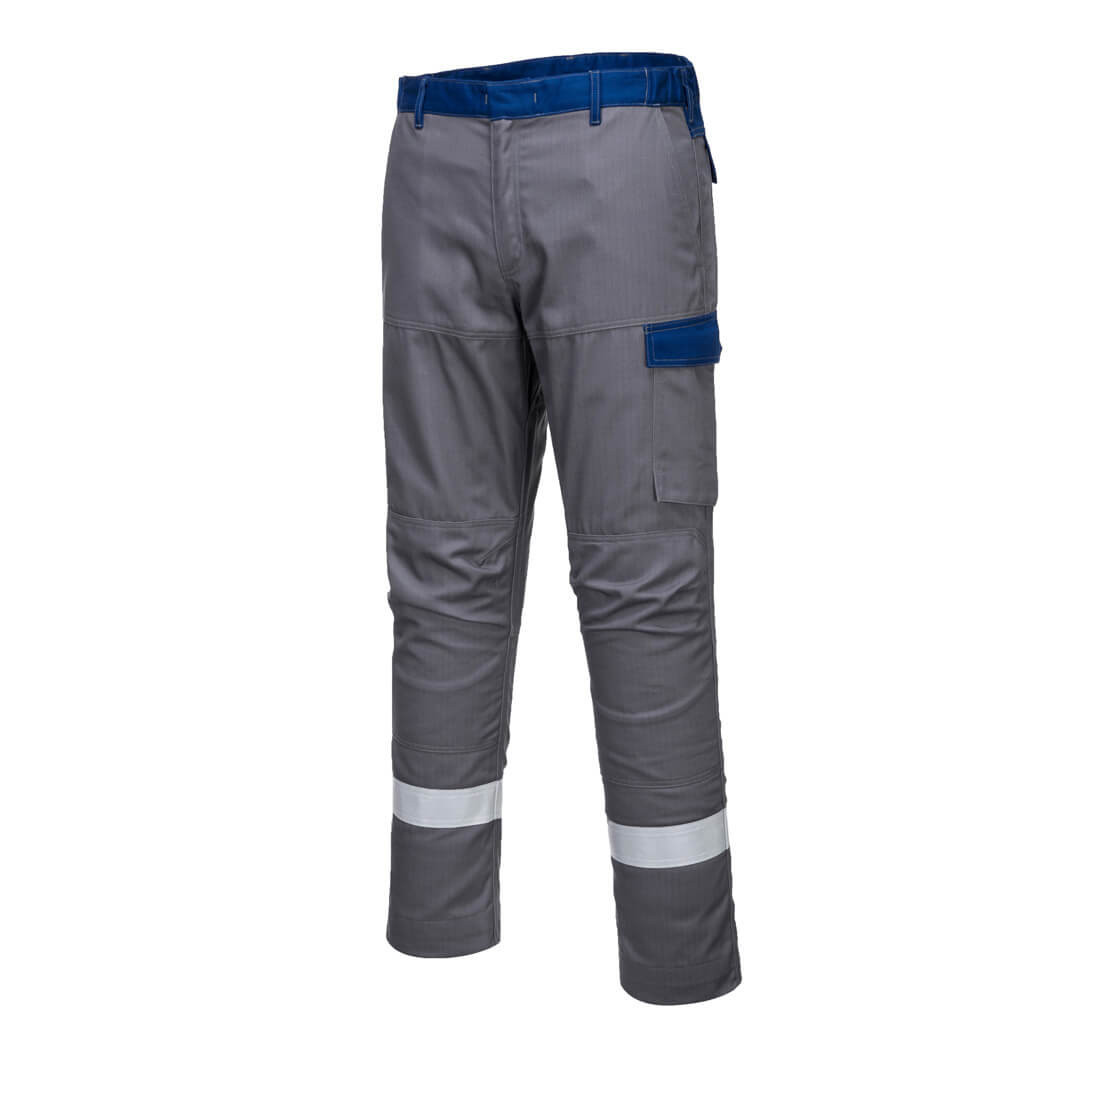 Pantaloni Bizflame Ultra in 2 nuante - Imbracaminte de protectie